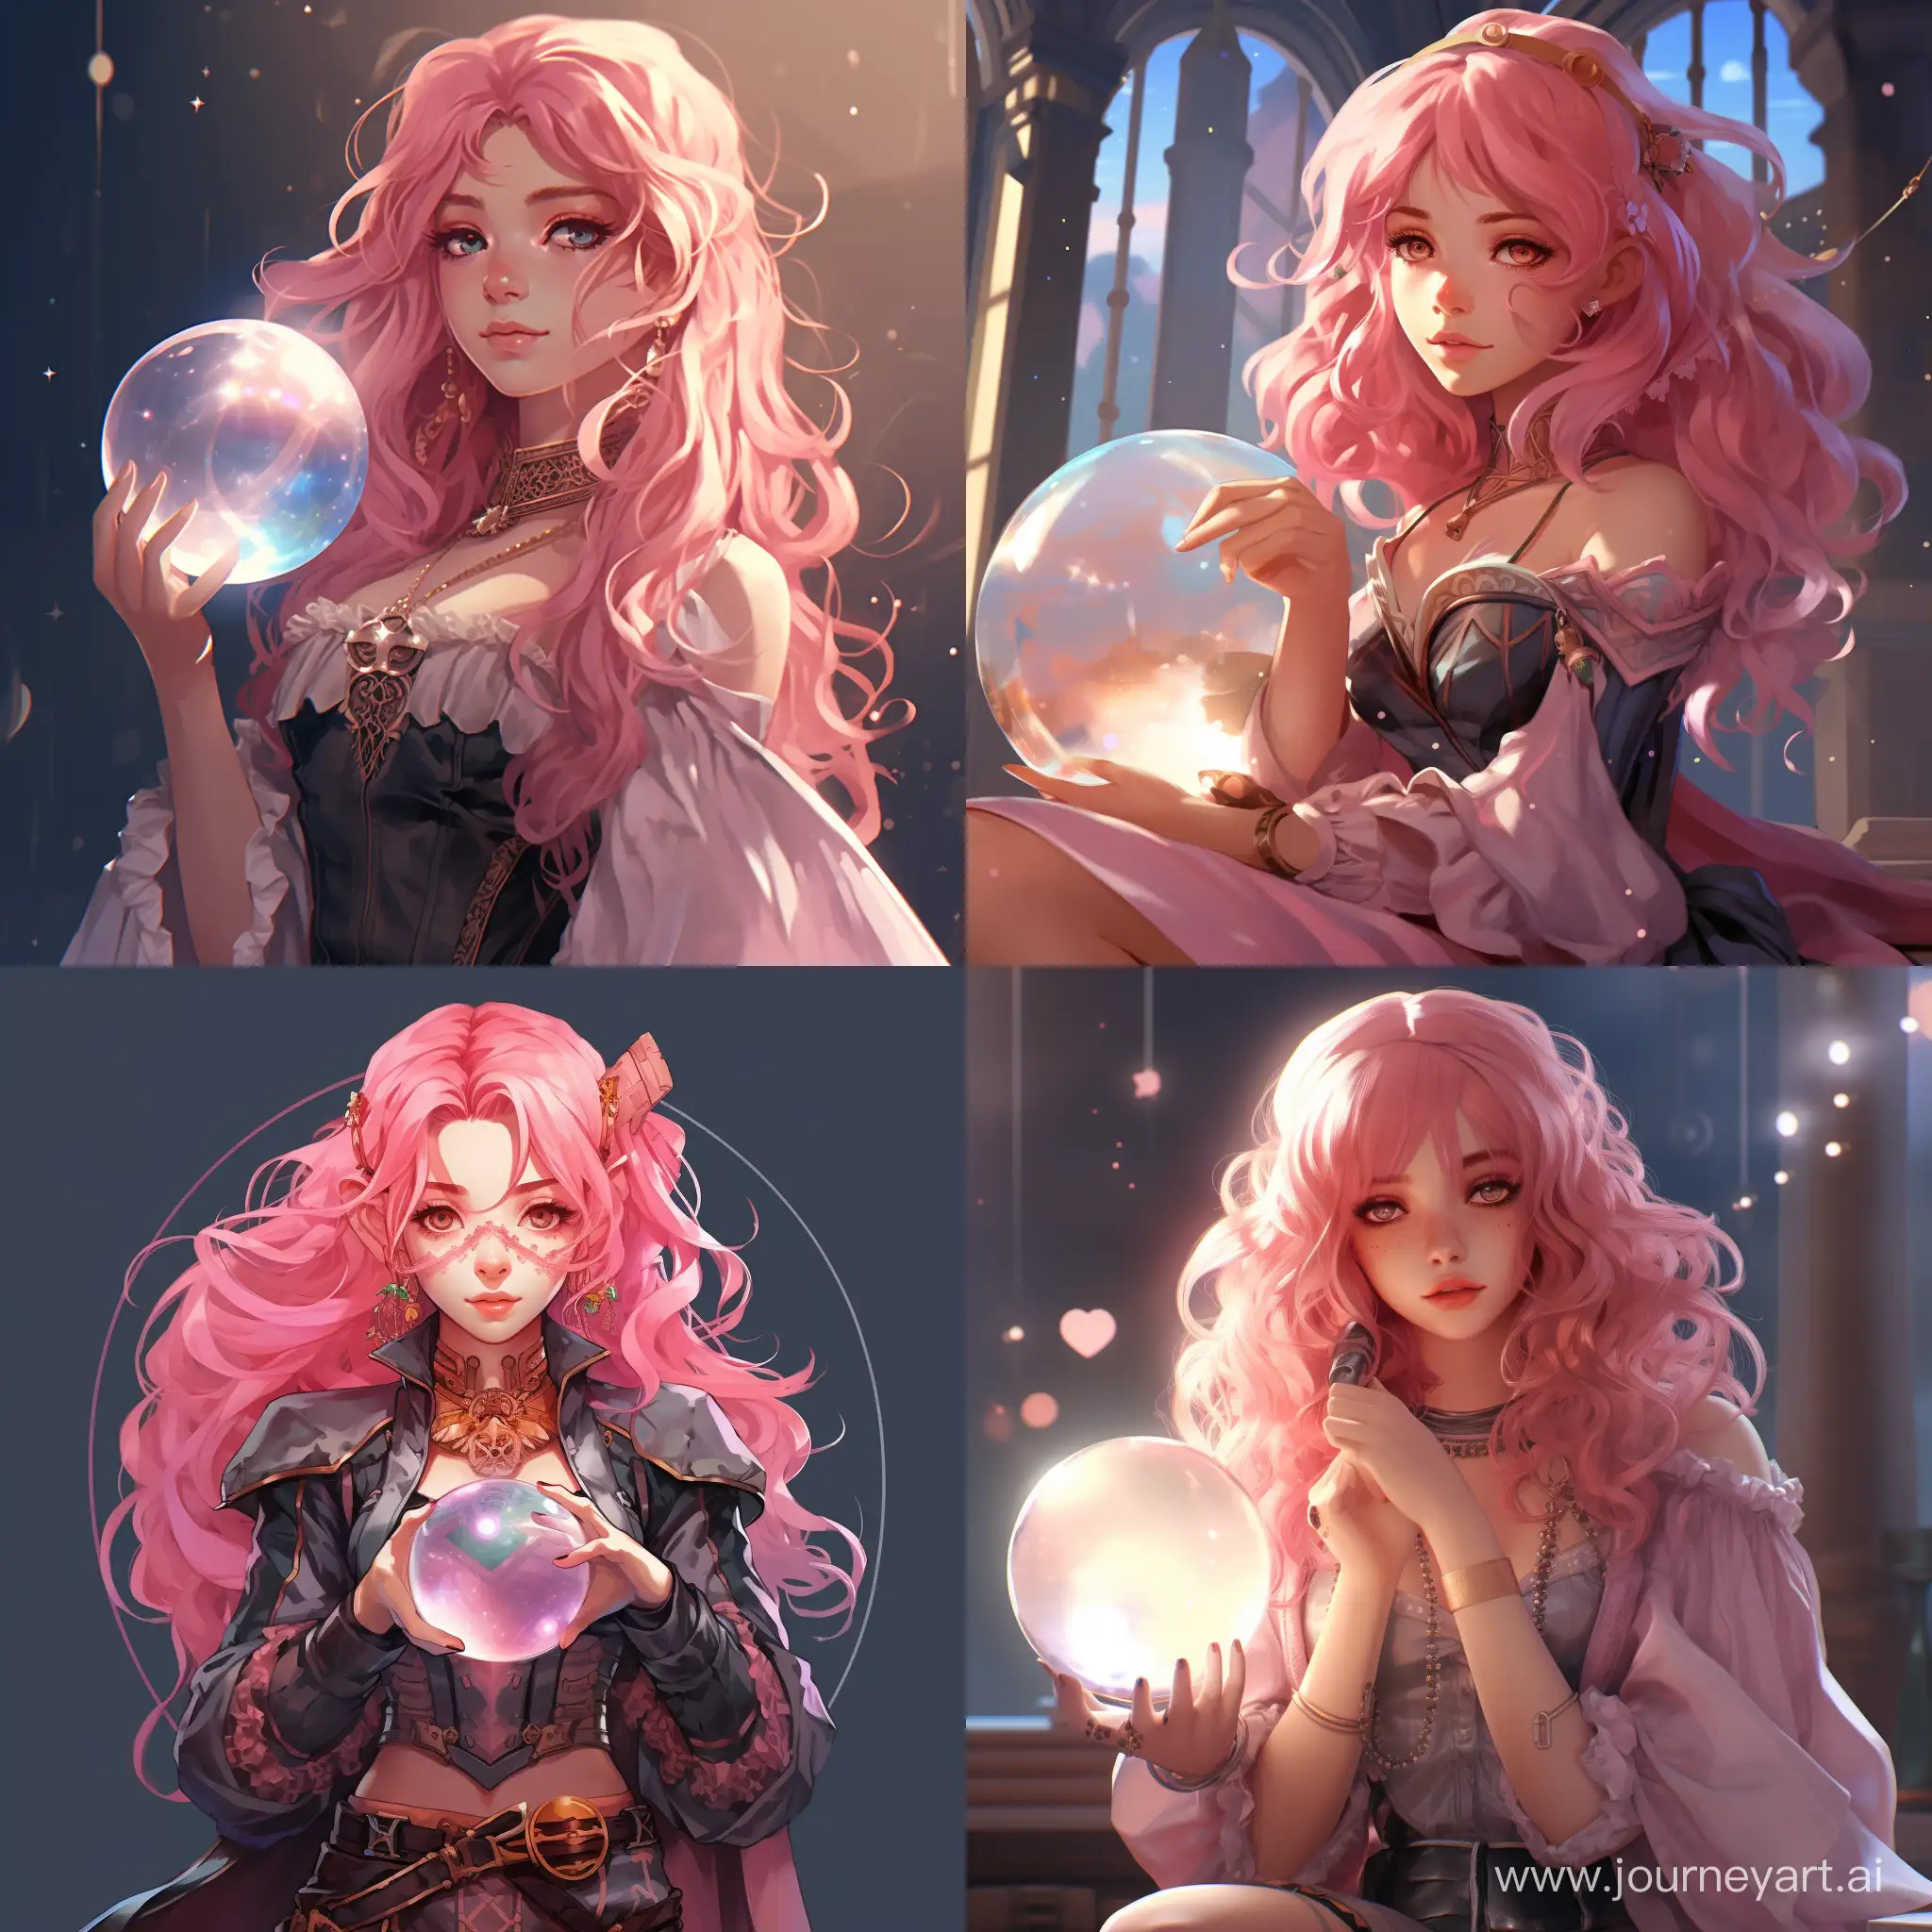 Enchanting-Anime-Wizard-Girl-with-Pink-Hair-and-Crystal-Ball